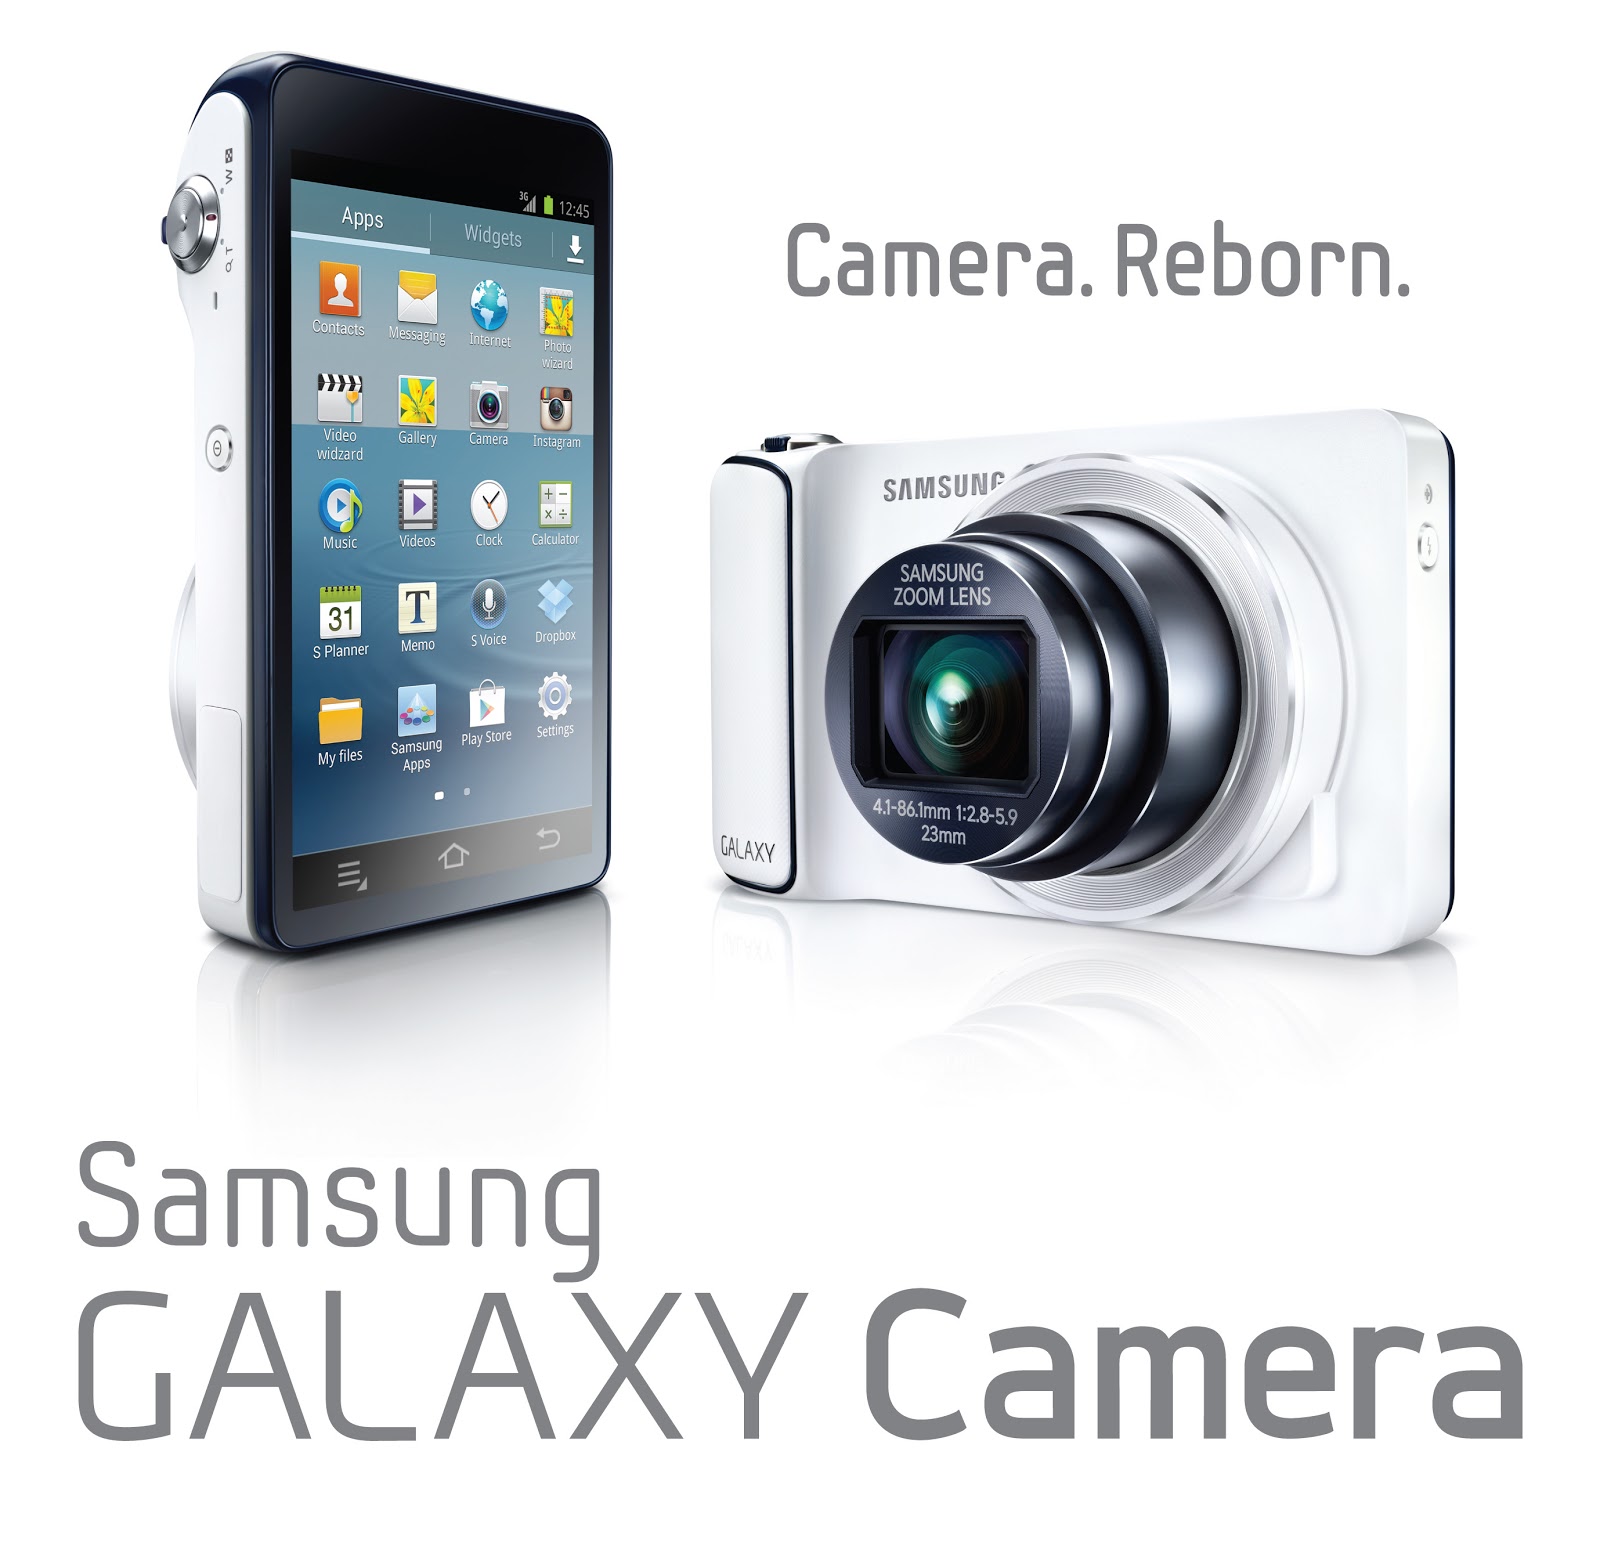 Samsung_GALAXY_Camera_01.jpg